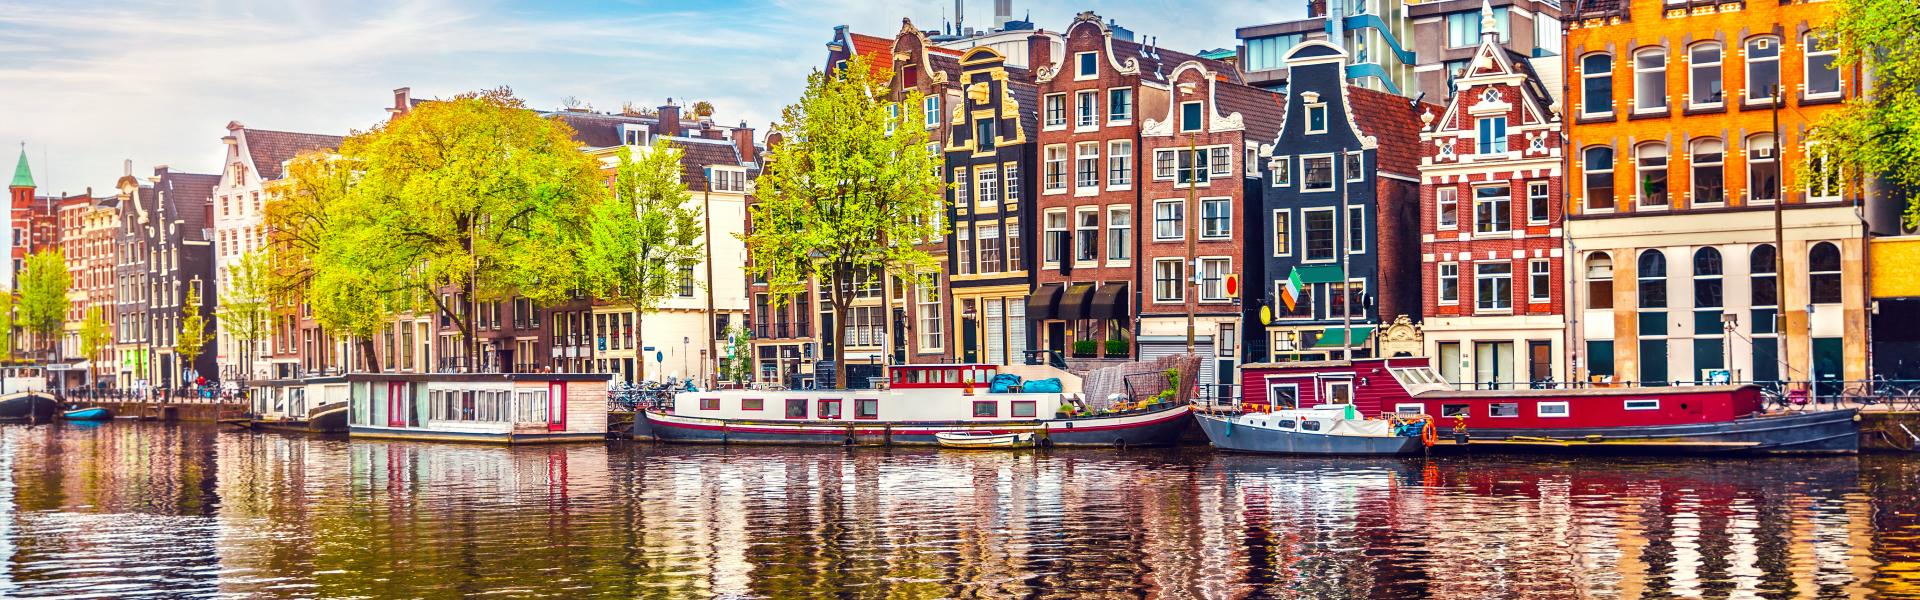 Vakantiewoning in Amsterdam, veelzijdig en spannend - Casamundo